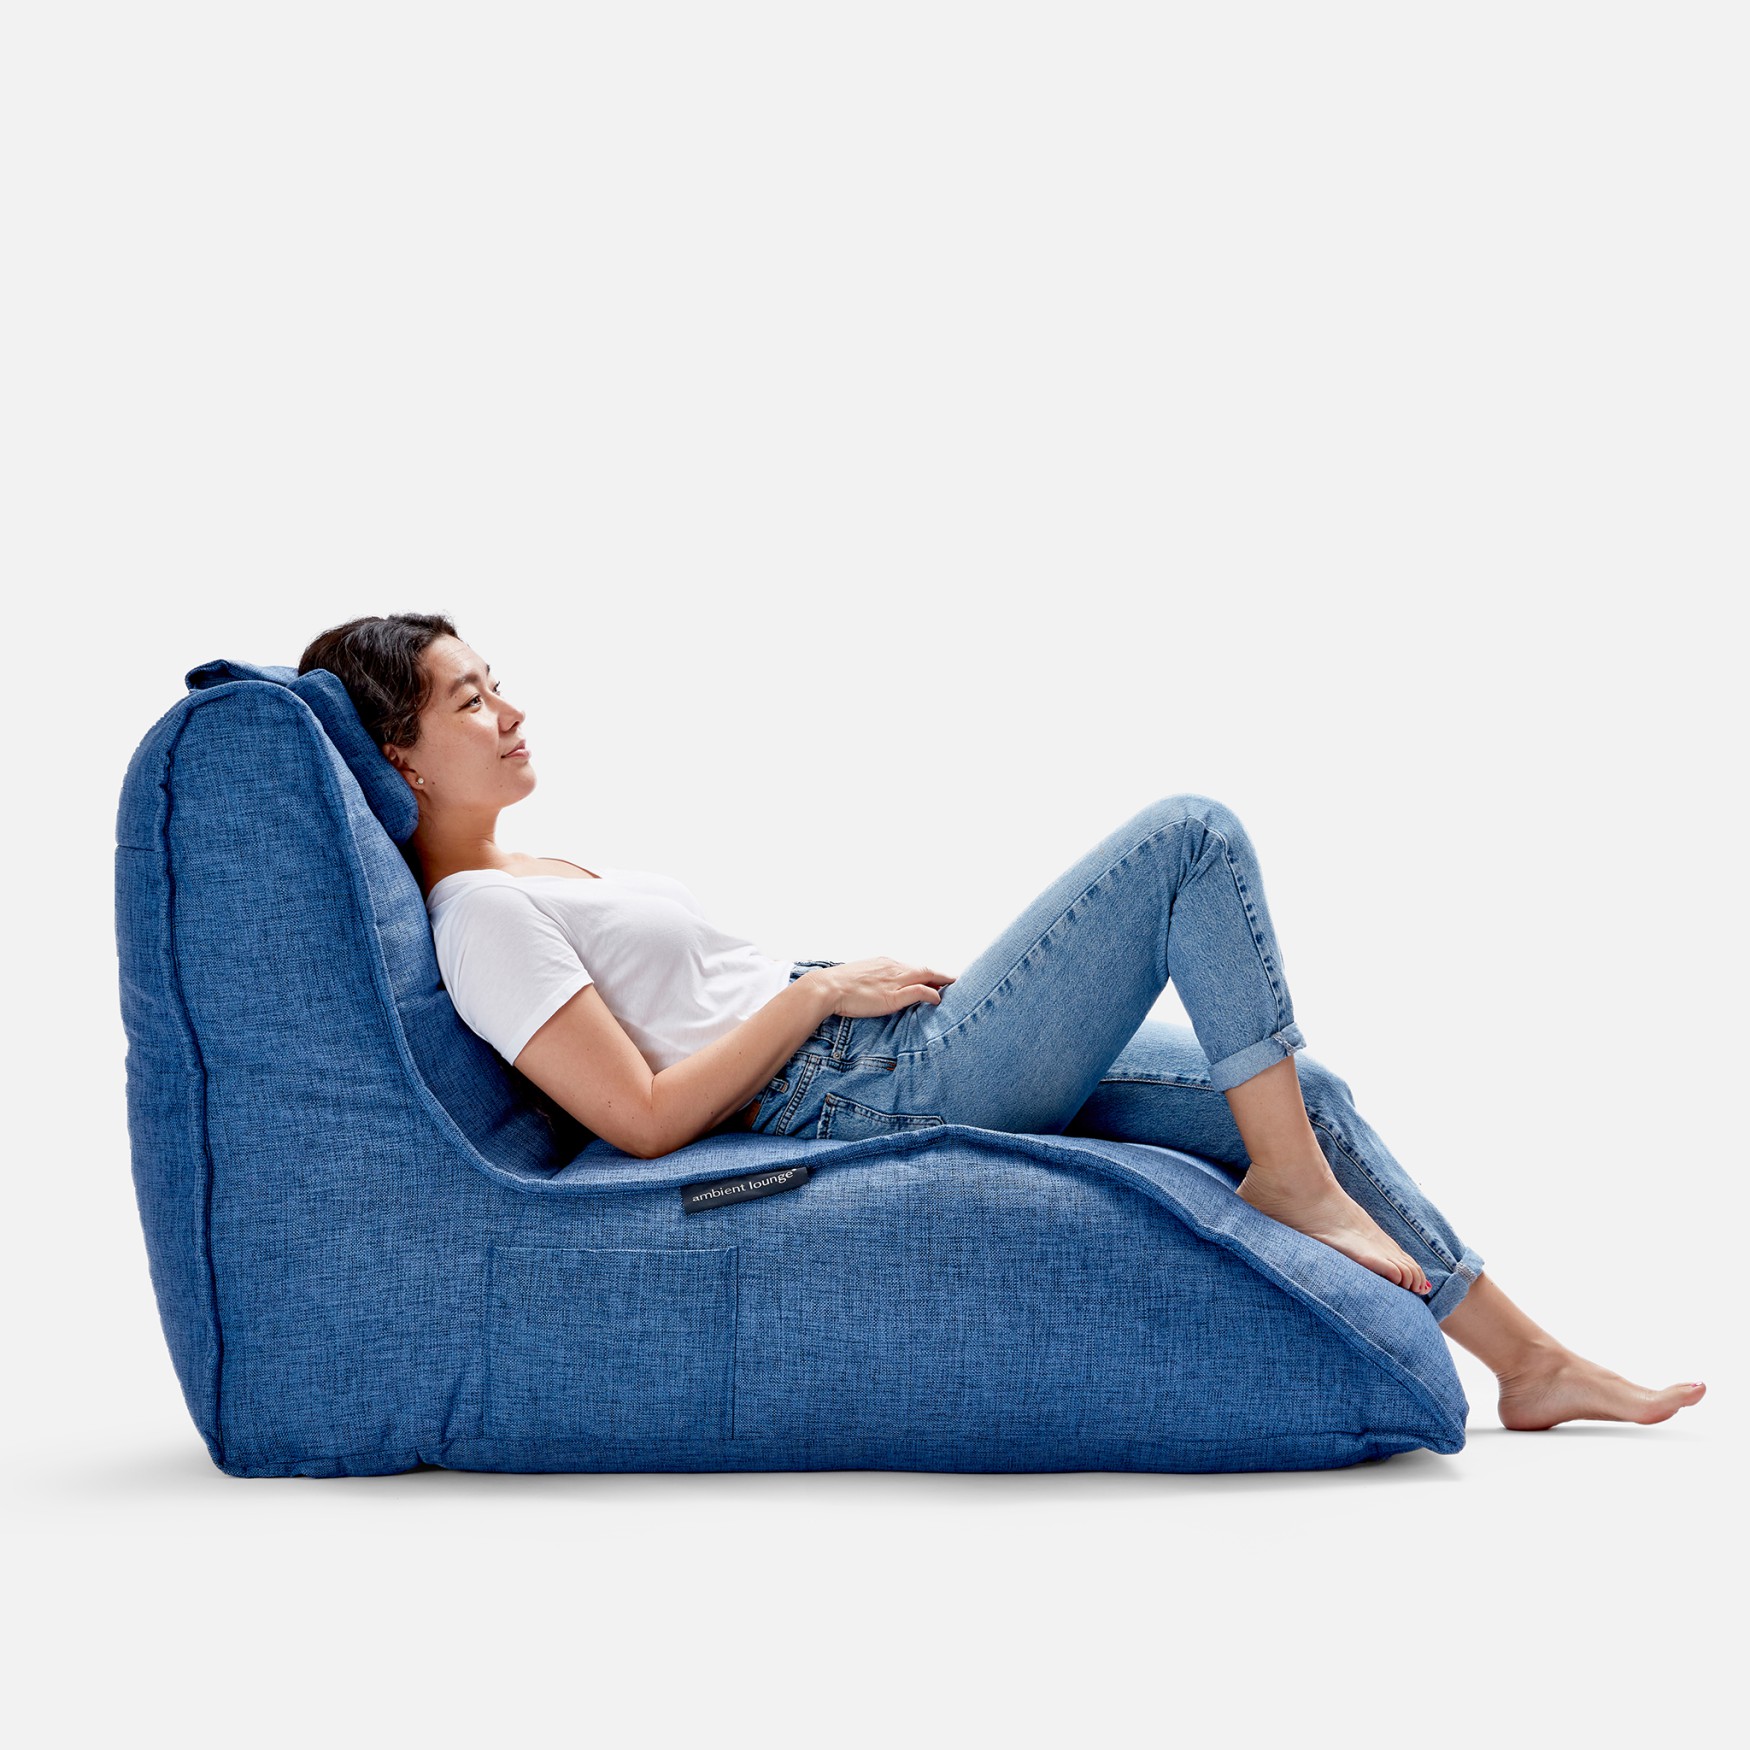 ambient lounge avatar sofa blue jazz